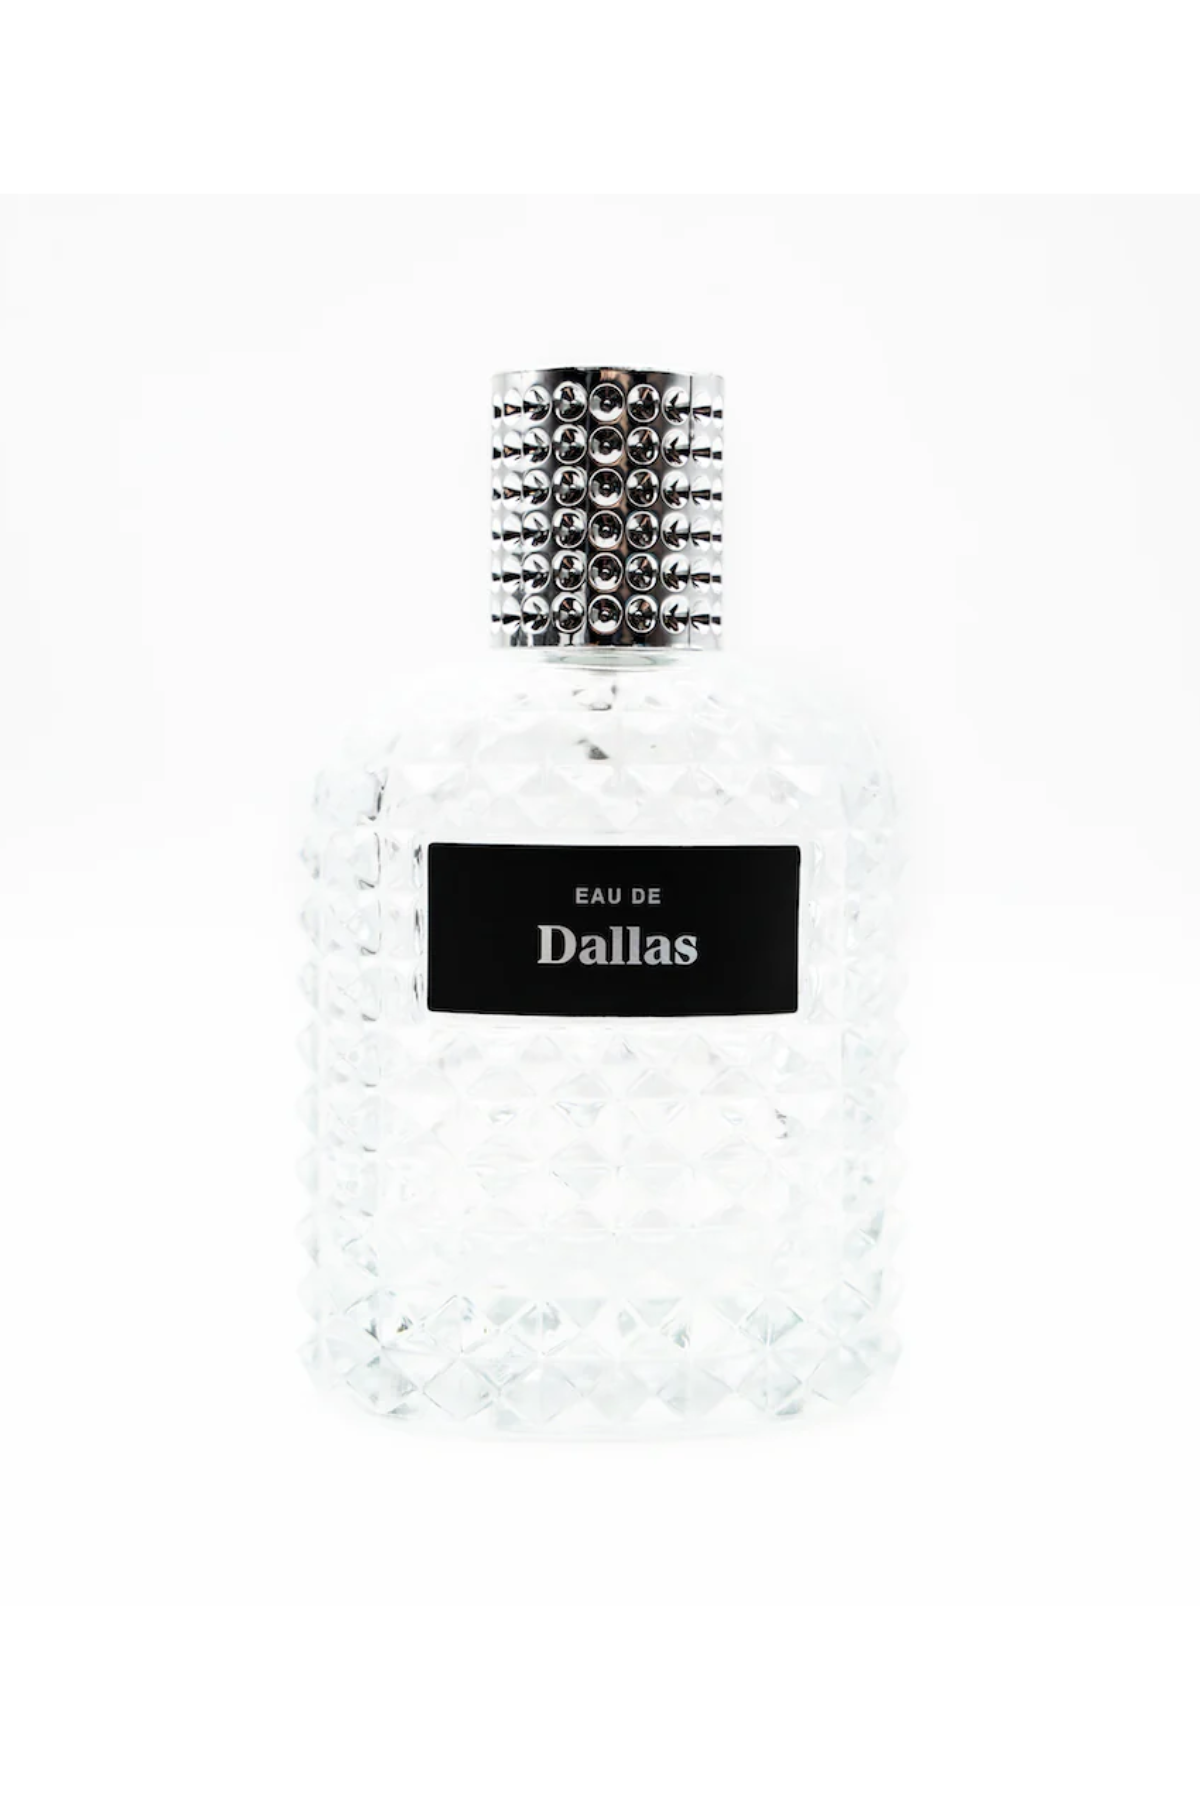 A bottle of Zodica Eau de Dallas perfume against a white background.